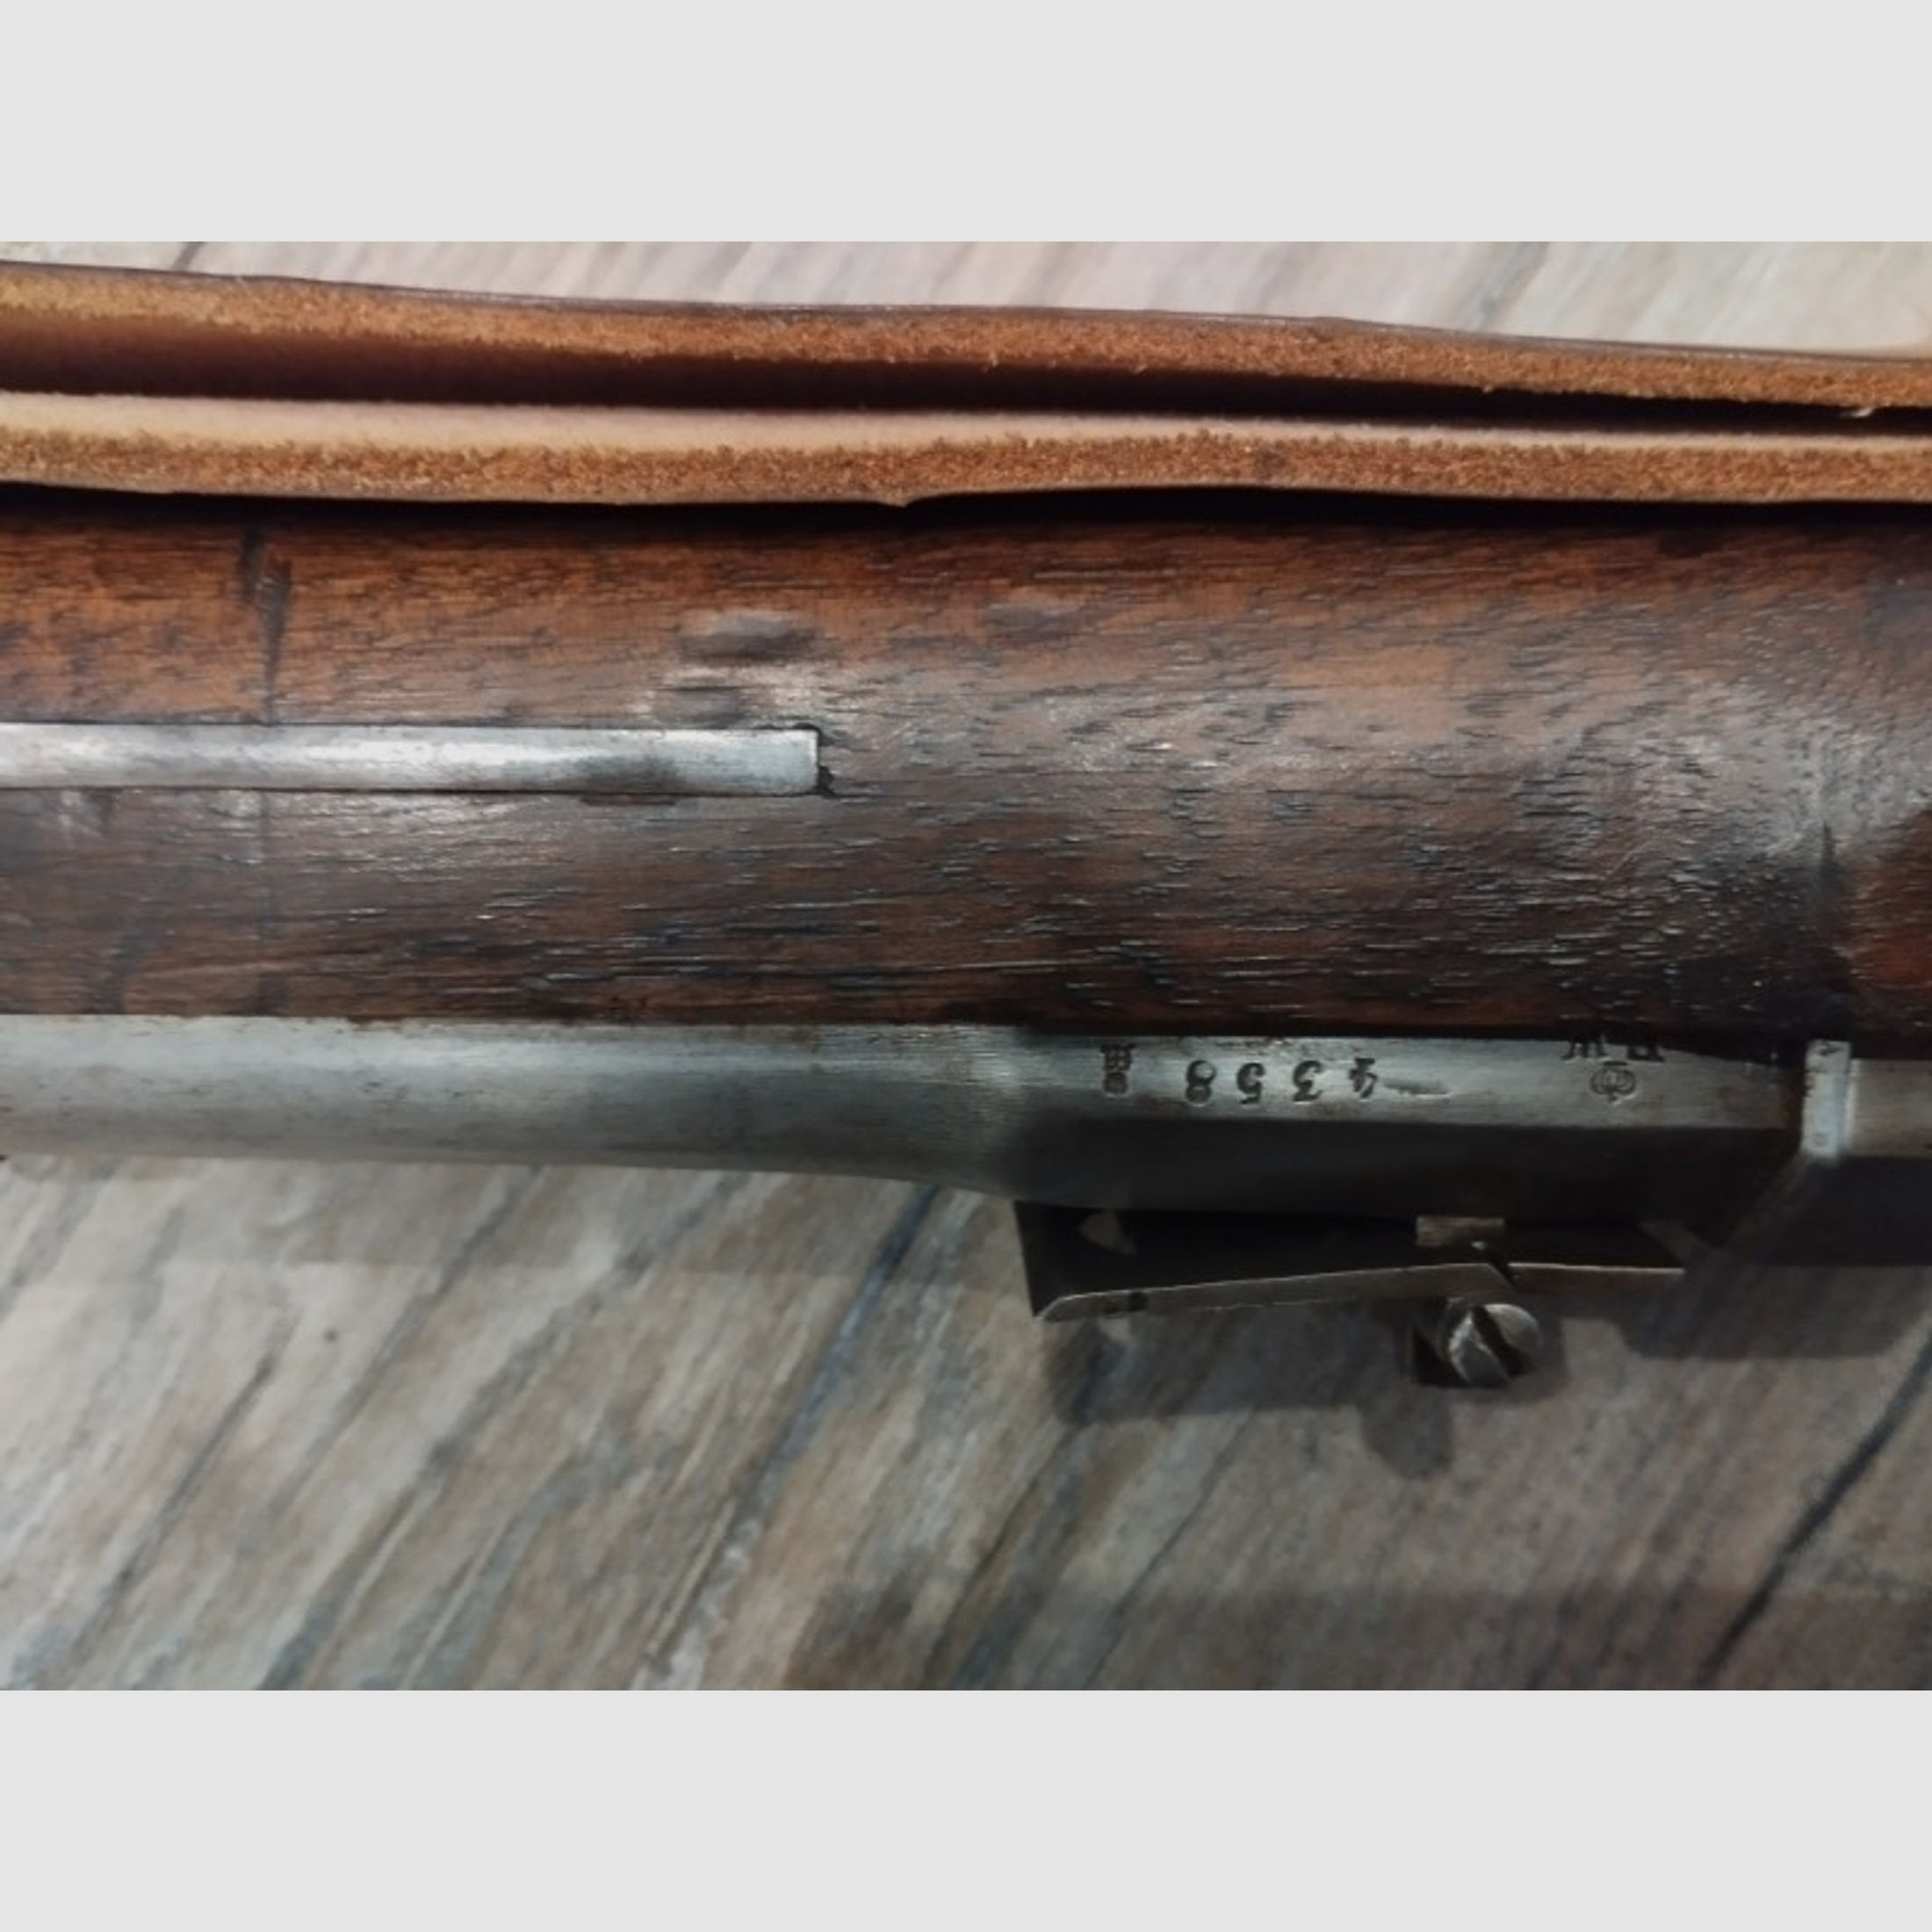 Zündnadelgewehr Dreyse Sömmerda, M1841